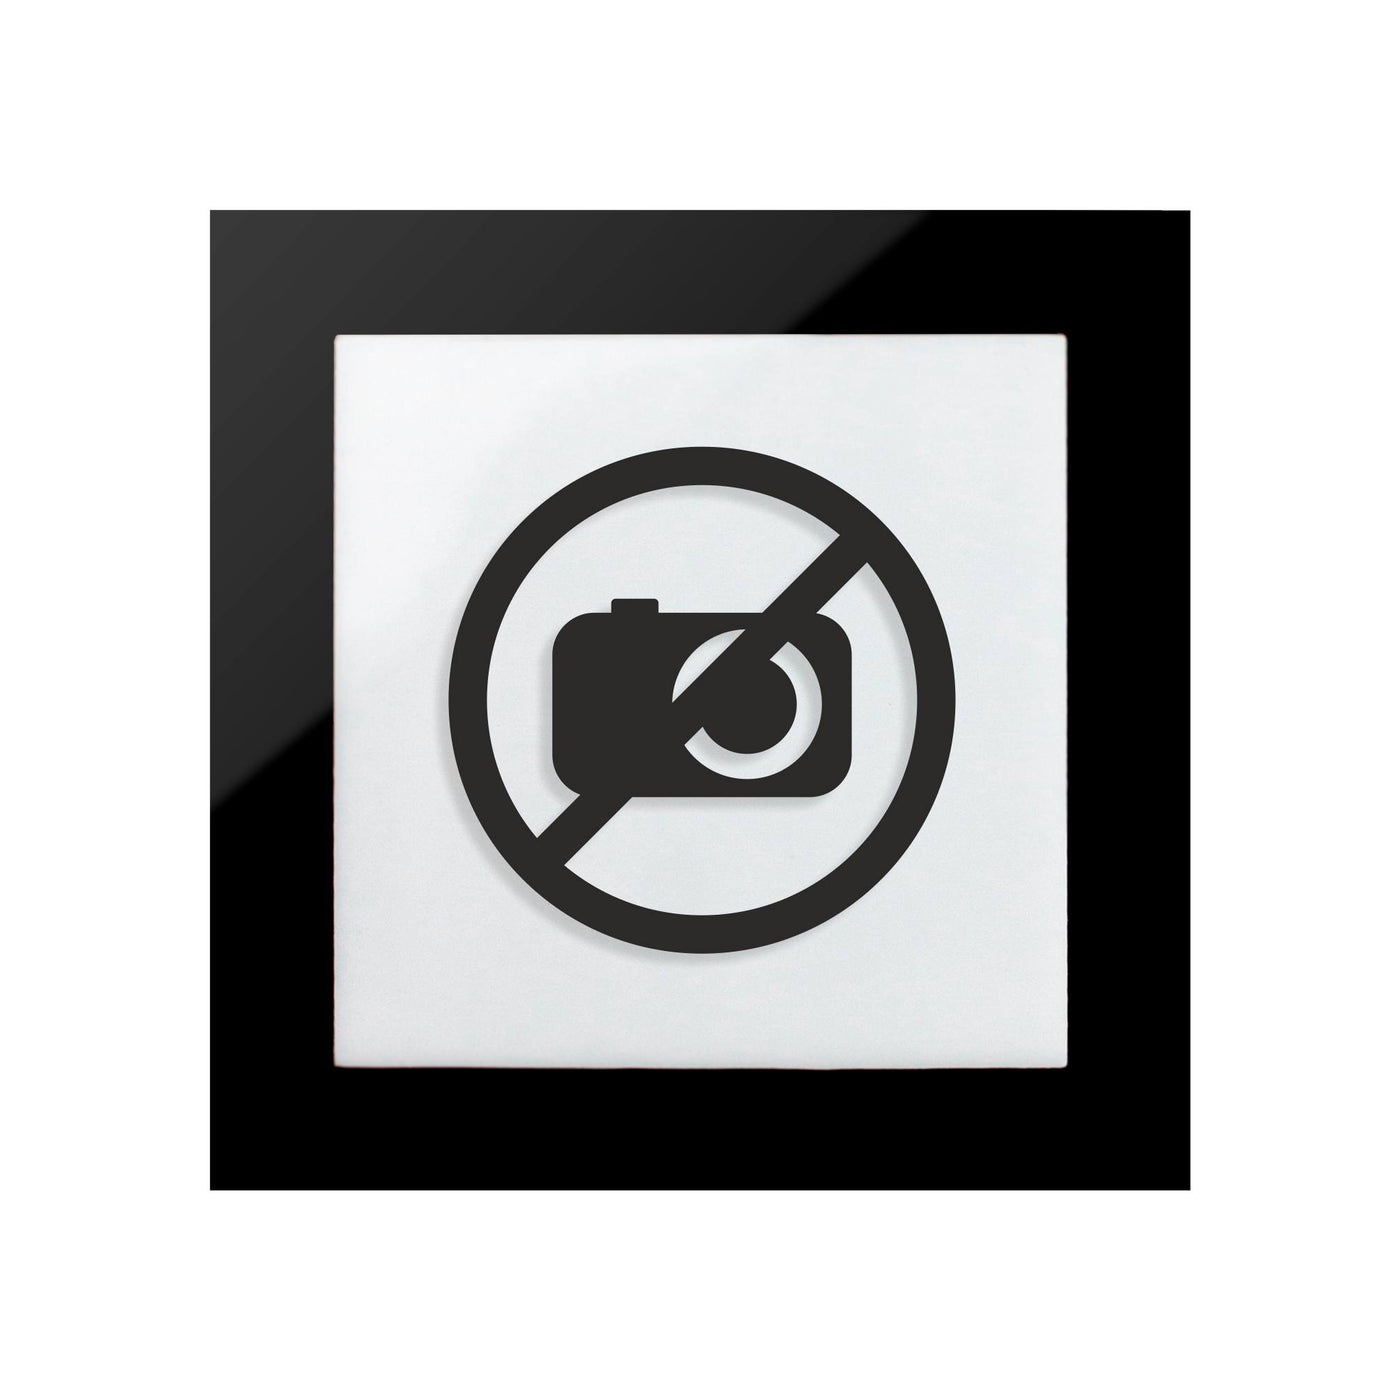 No Photo & Video Acrylic Sign - "Simple" Design